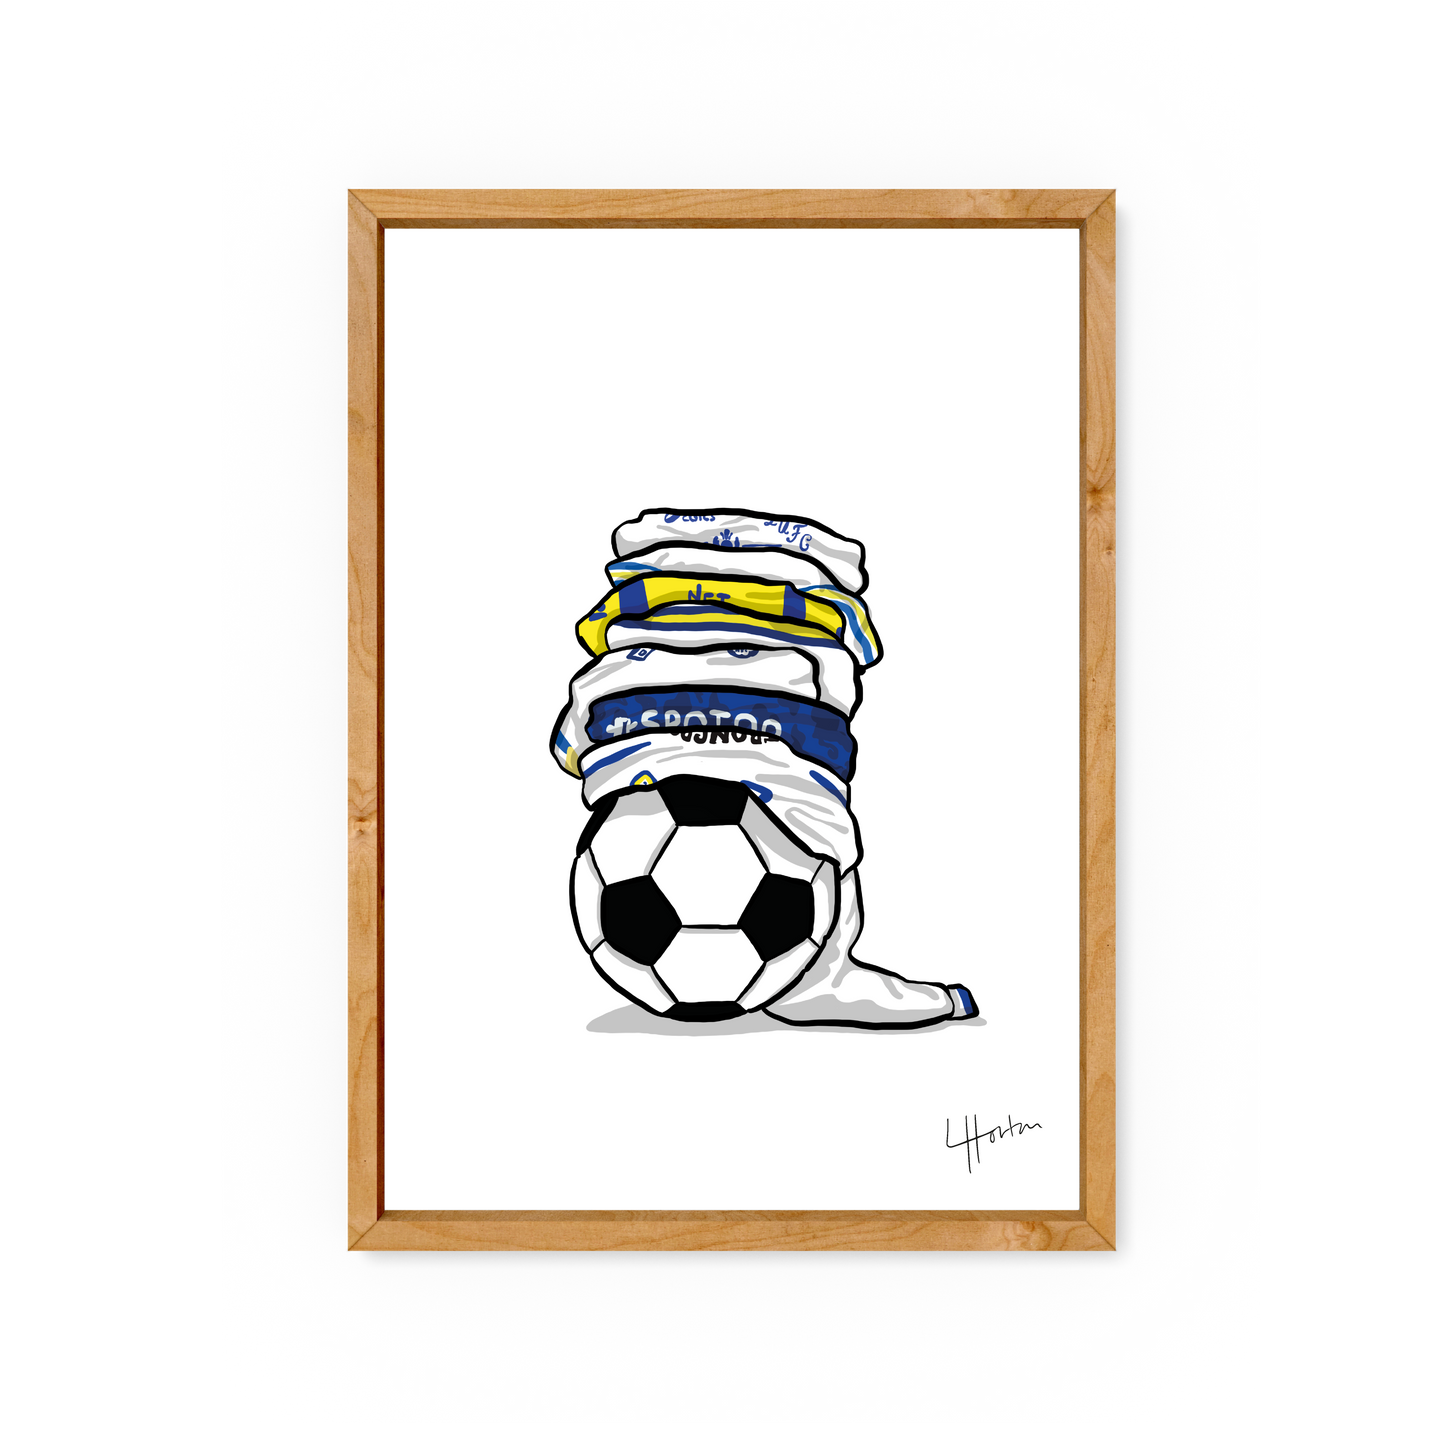 LUFC Shirts - Leeds United FC Art Print - Luke Horton